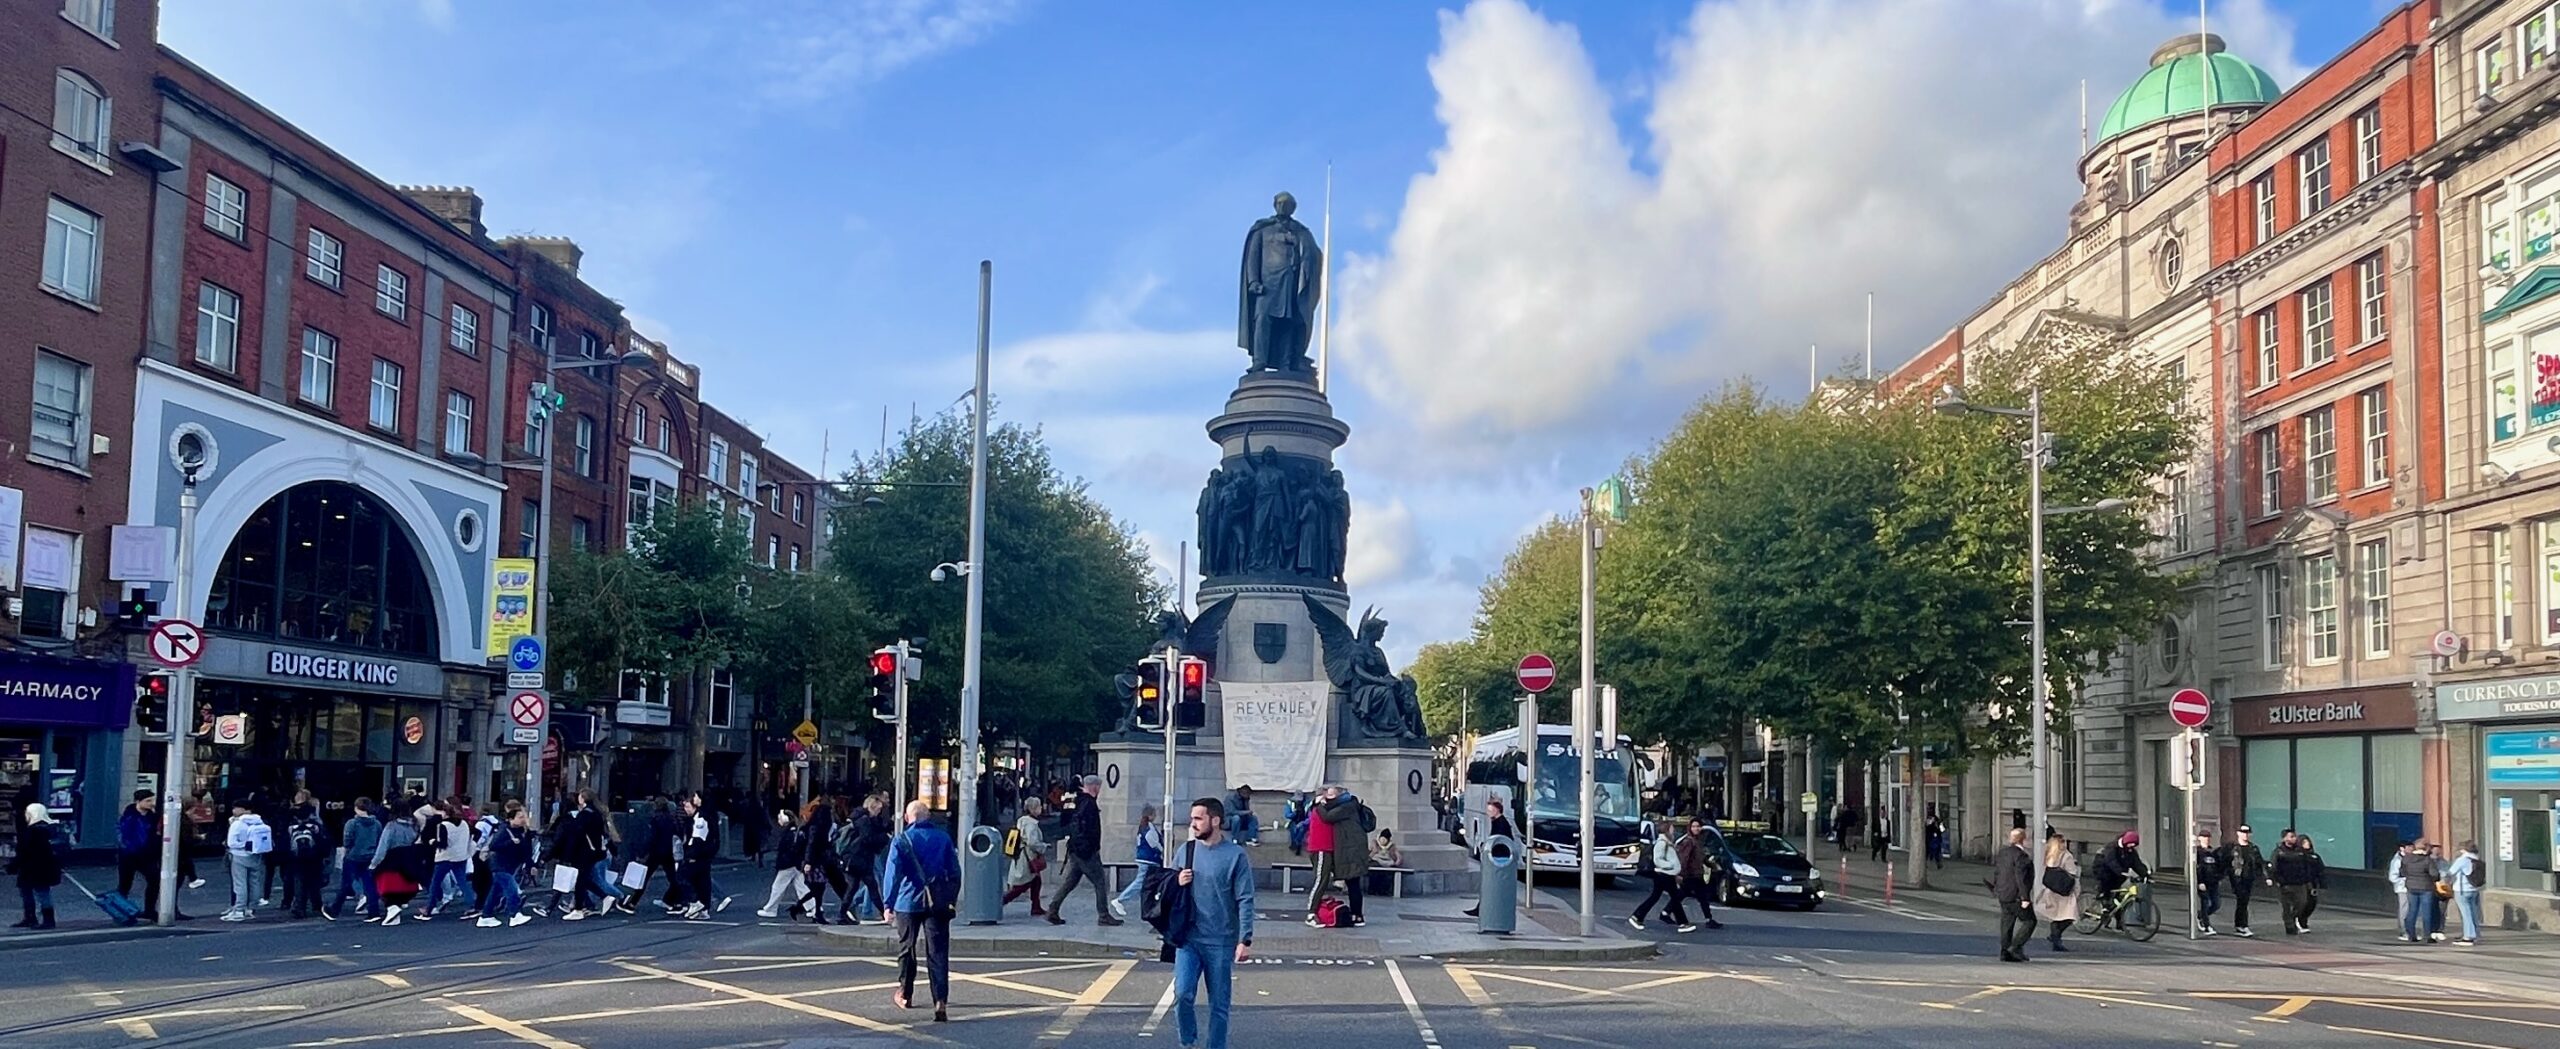 O’Connell Street in Dublin